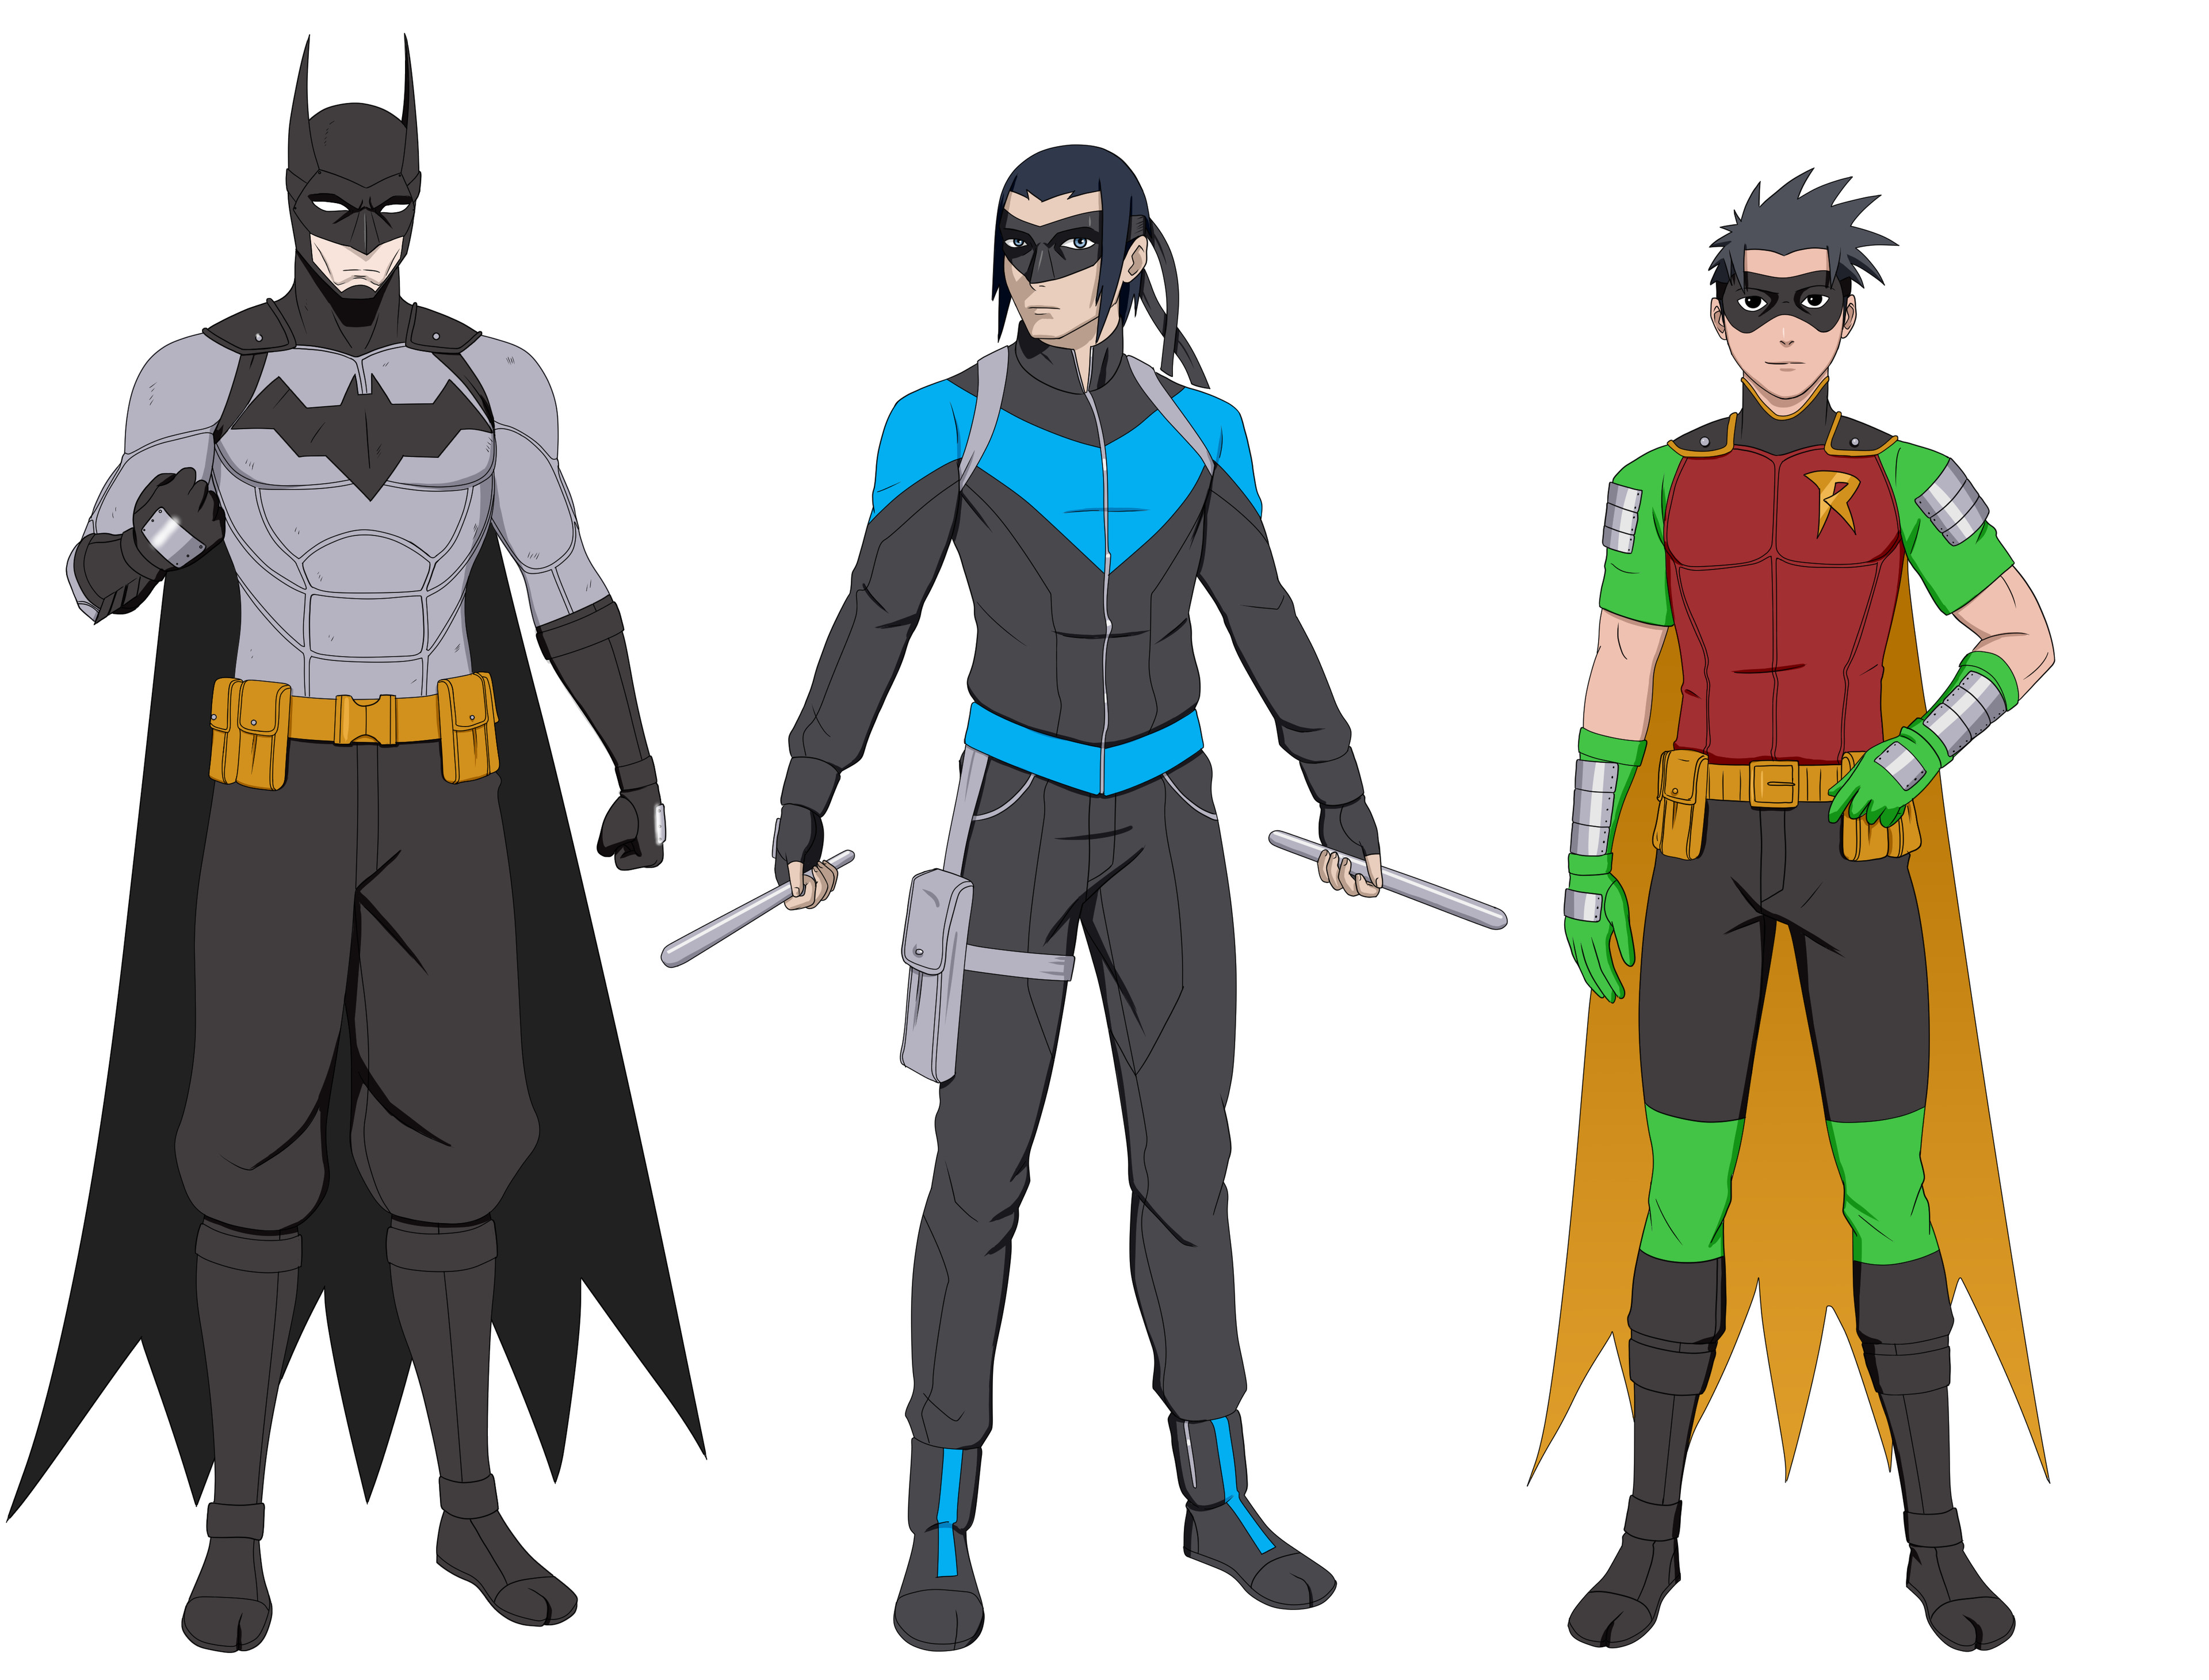 ArtStation - BATGIRL ANIME - Character designs : Cassandra Cain, Batman,  Nightwing, Robin - Oct. 2018